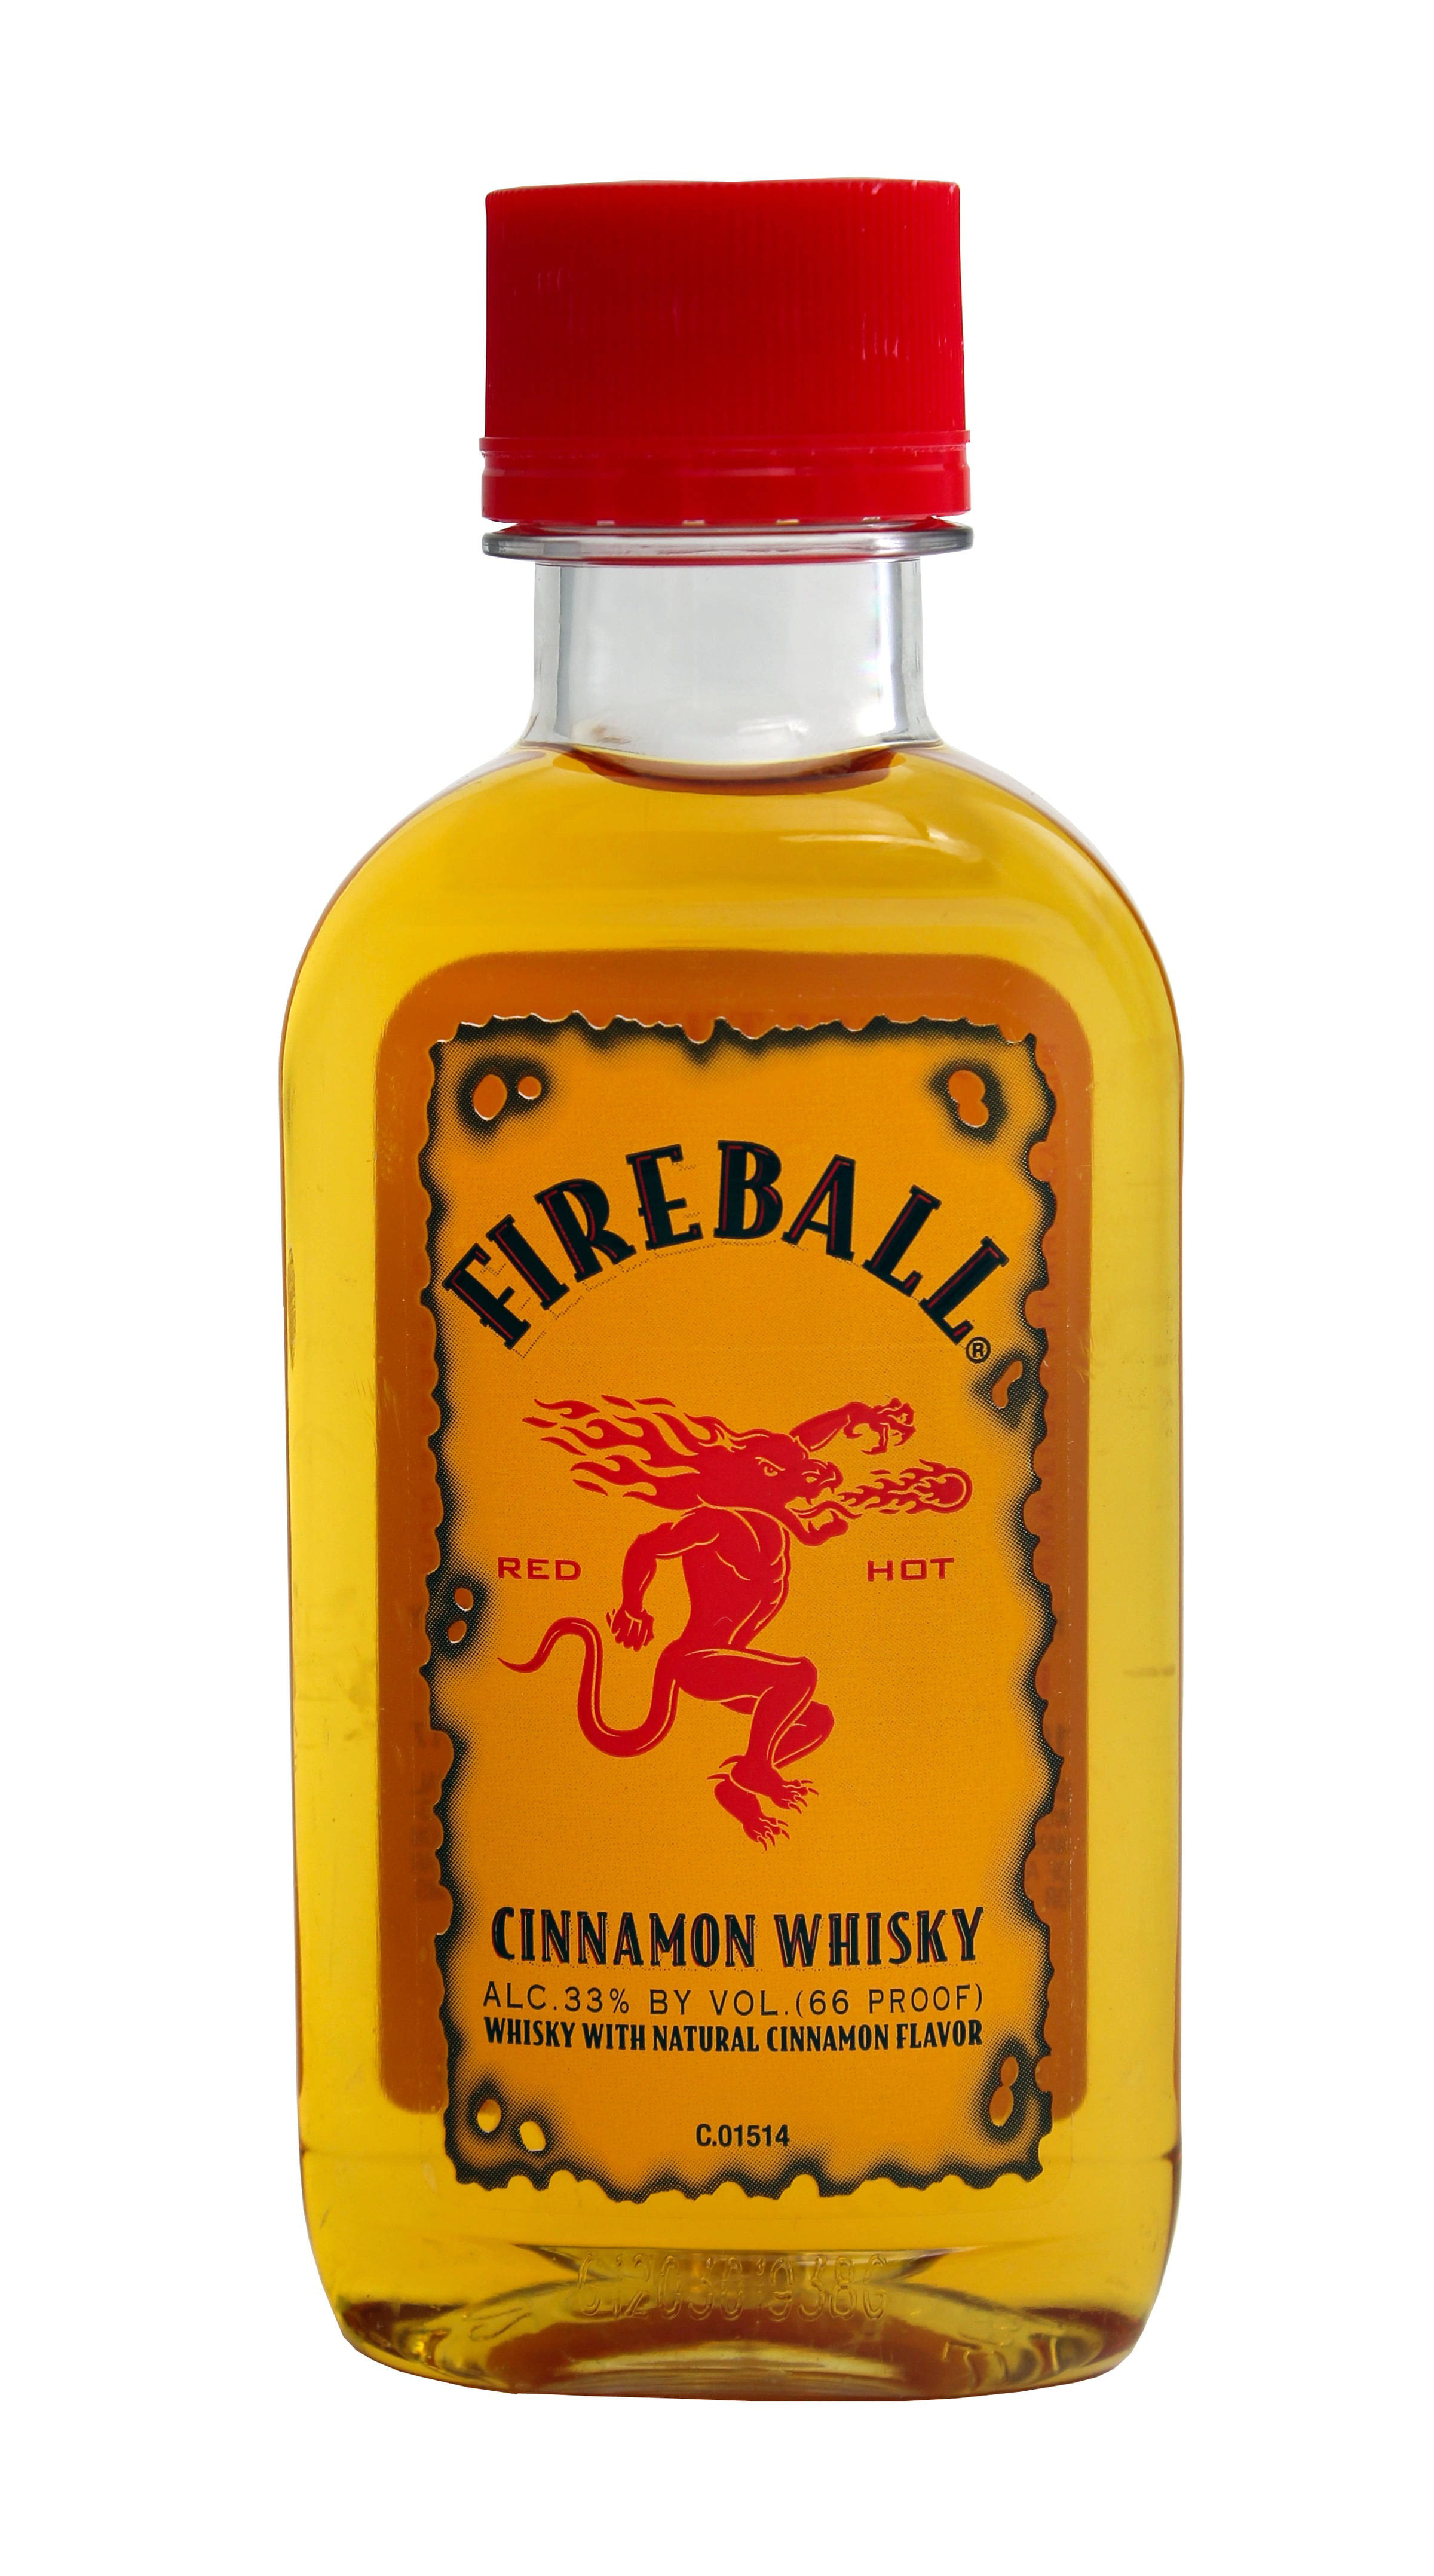 Fireball Cinnamon Whisky, Red Hot - 100 ml